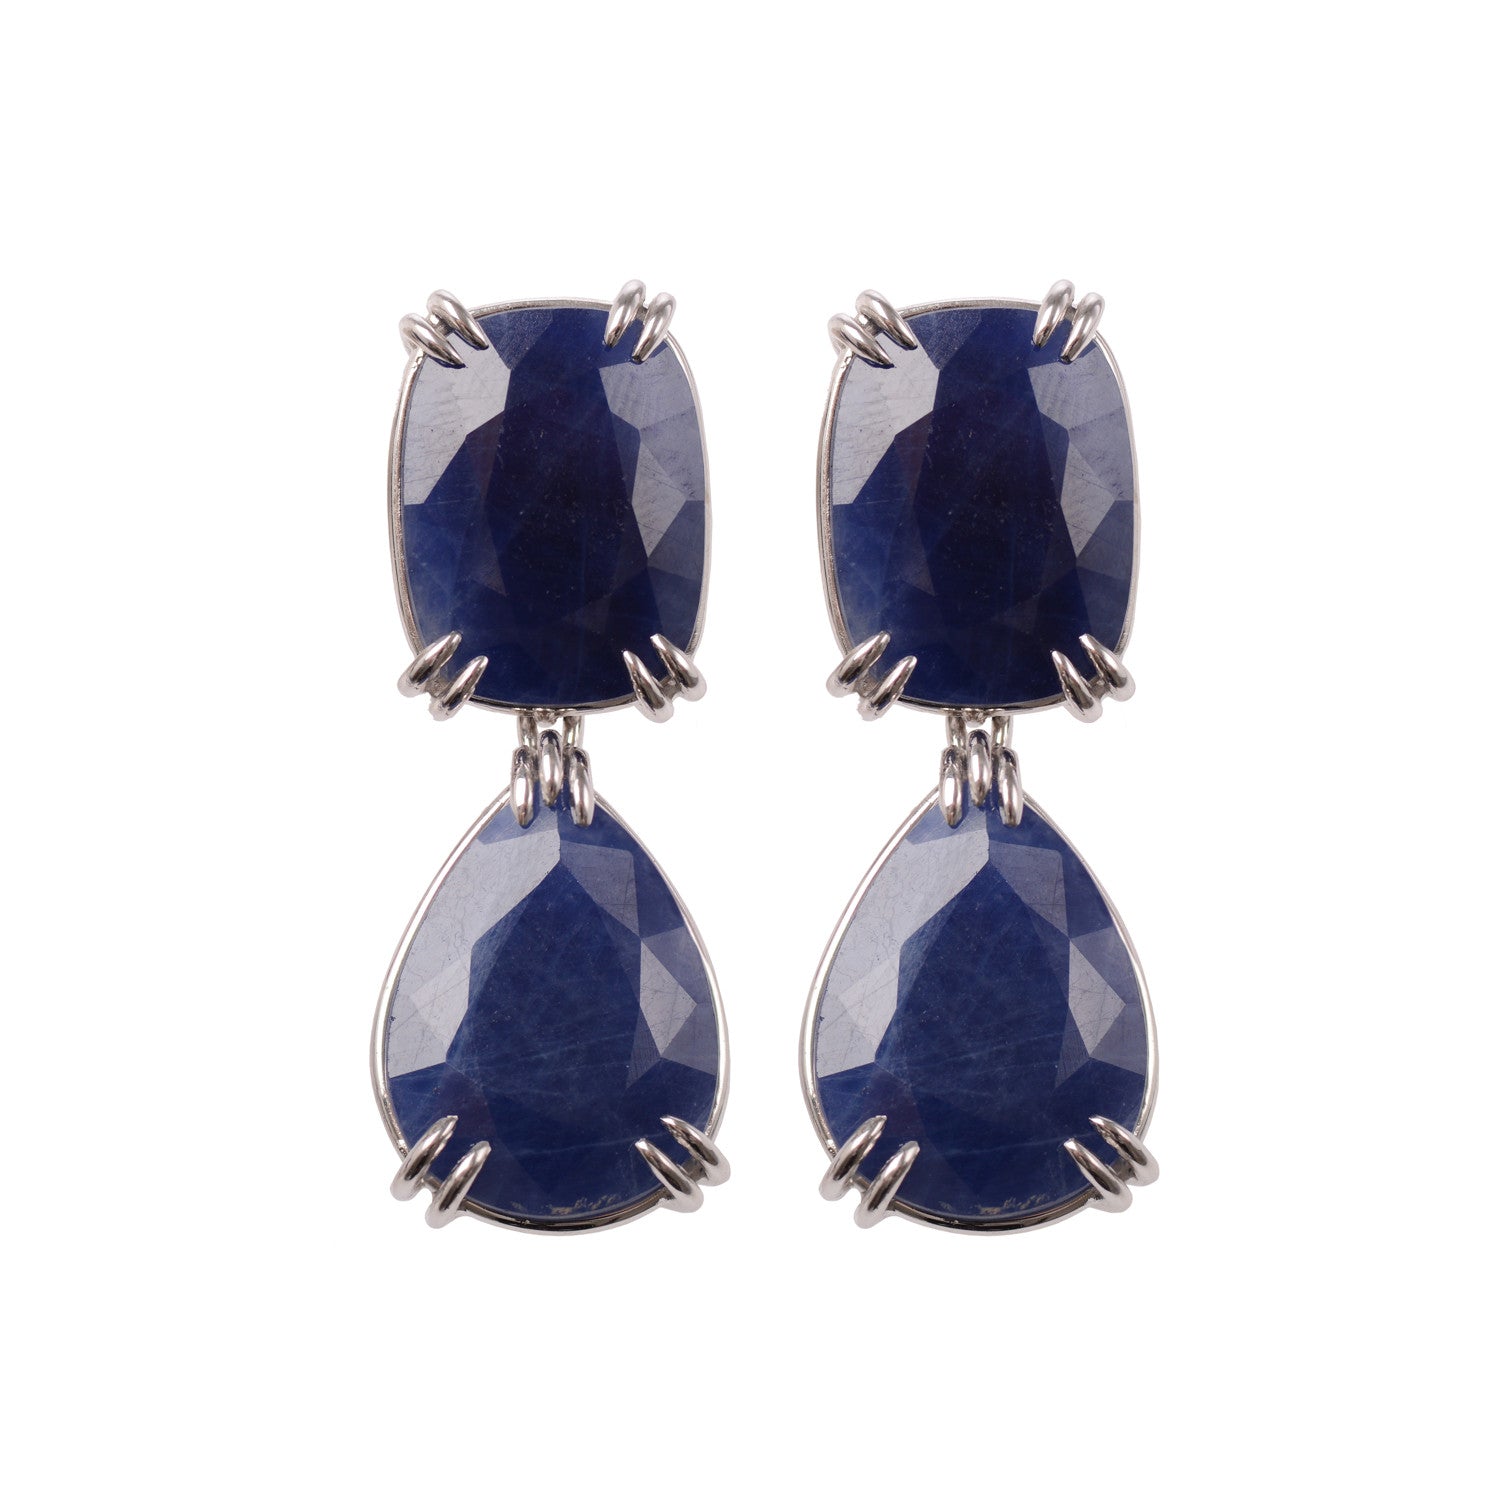 Blue Sapphire Earrings in 18ct white gold by McFarlane Fine Jewellery